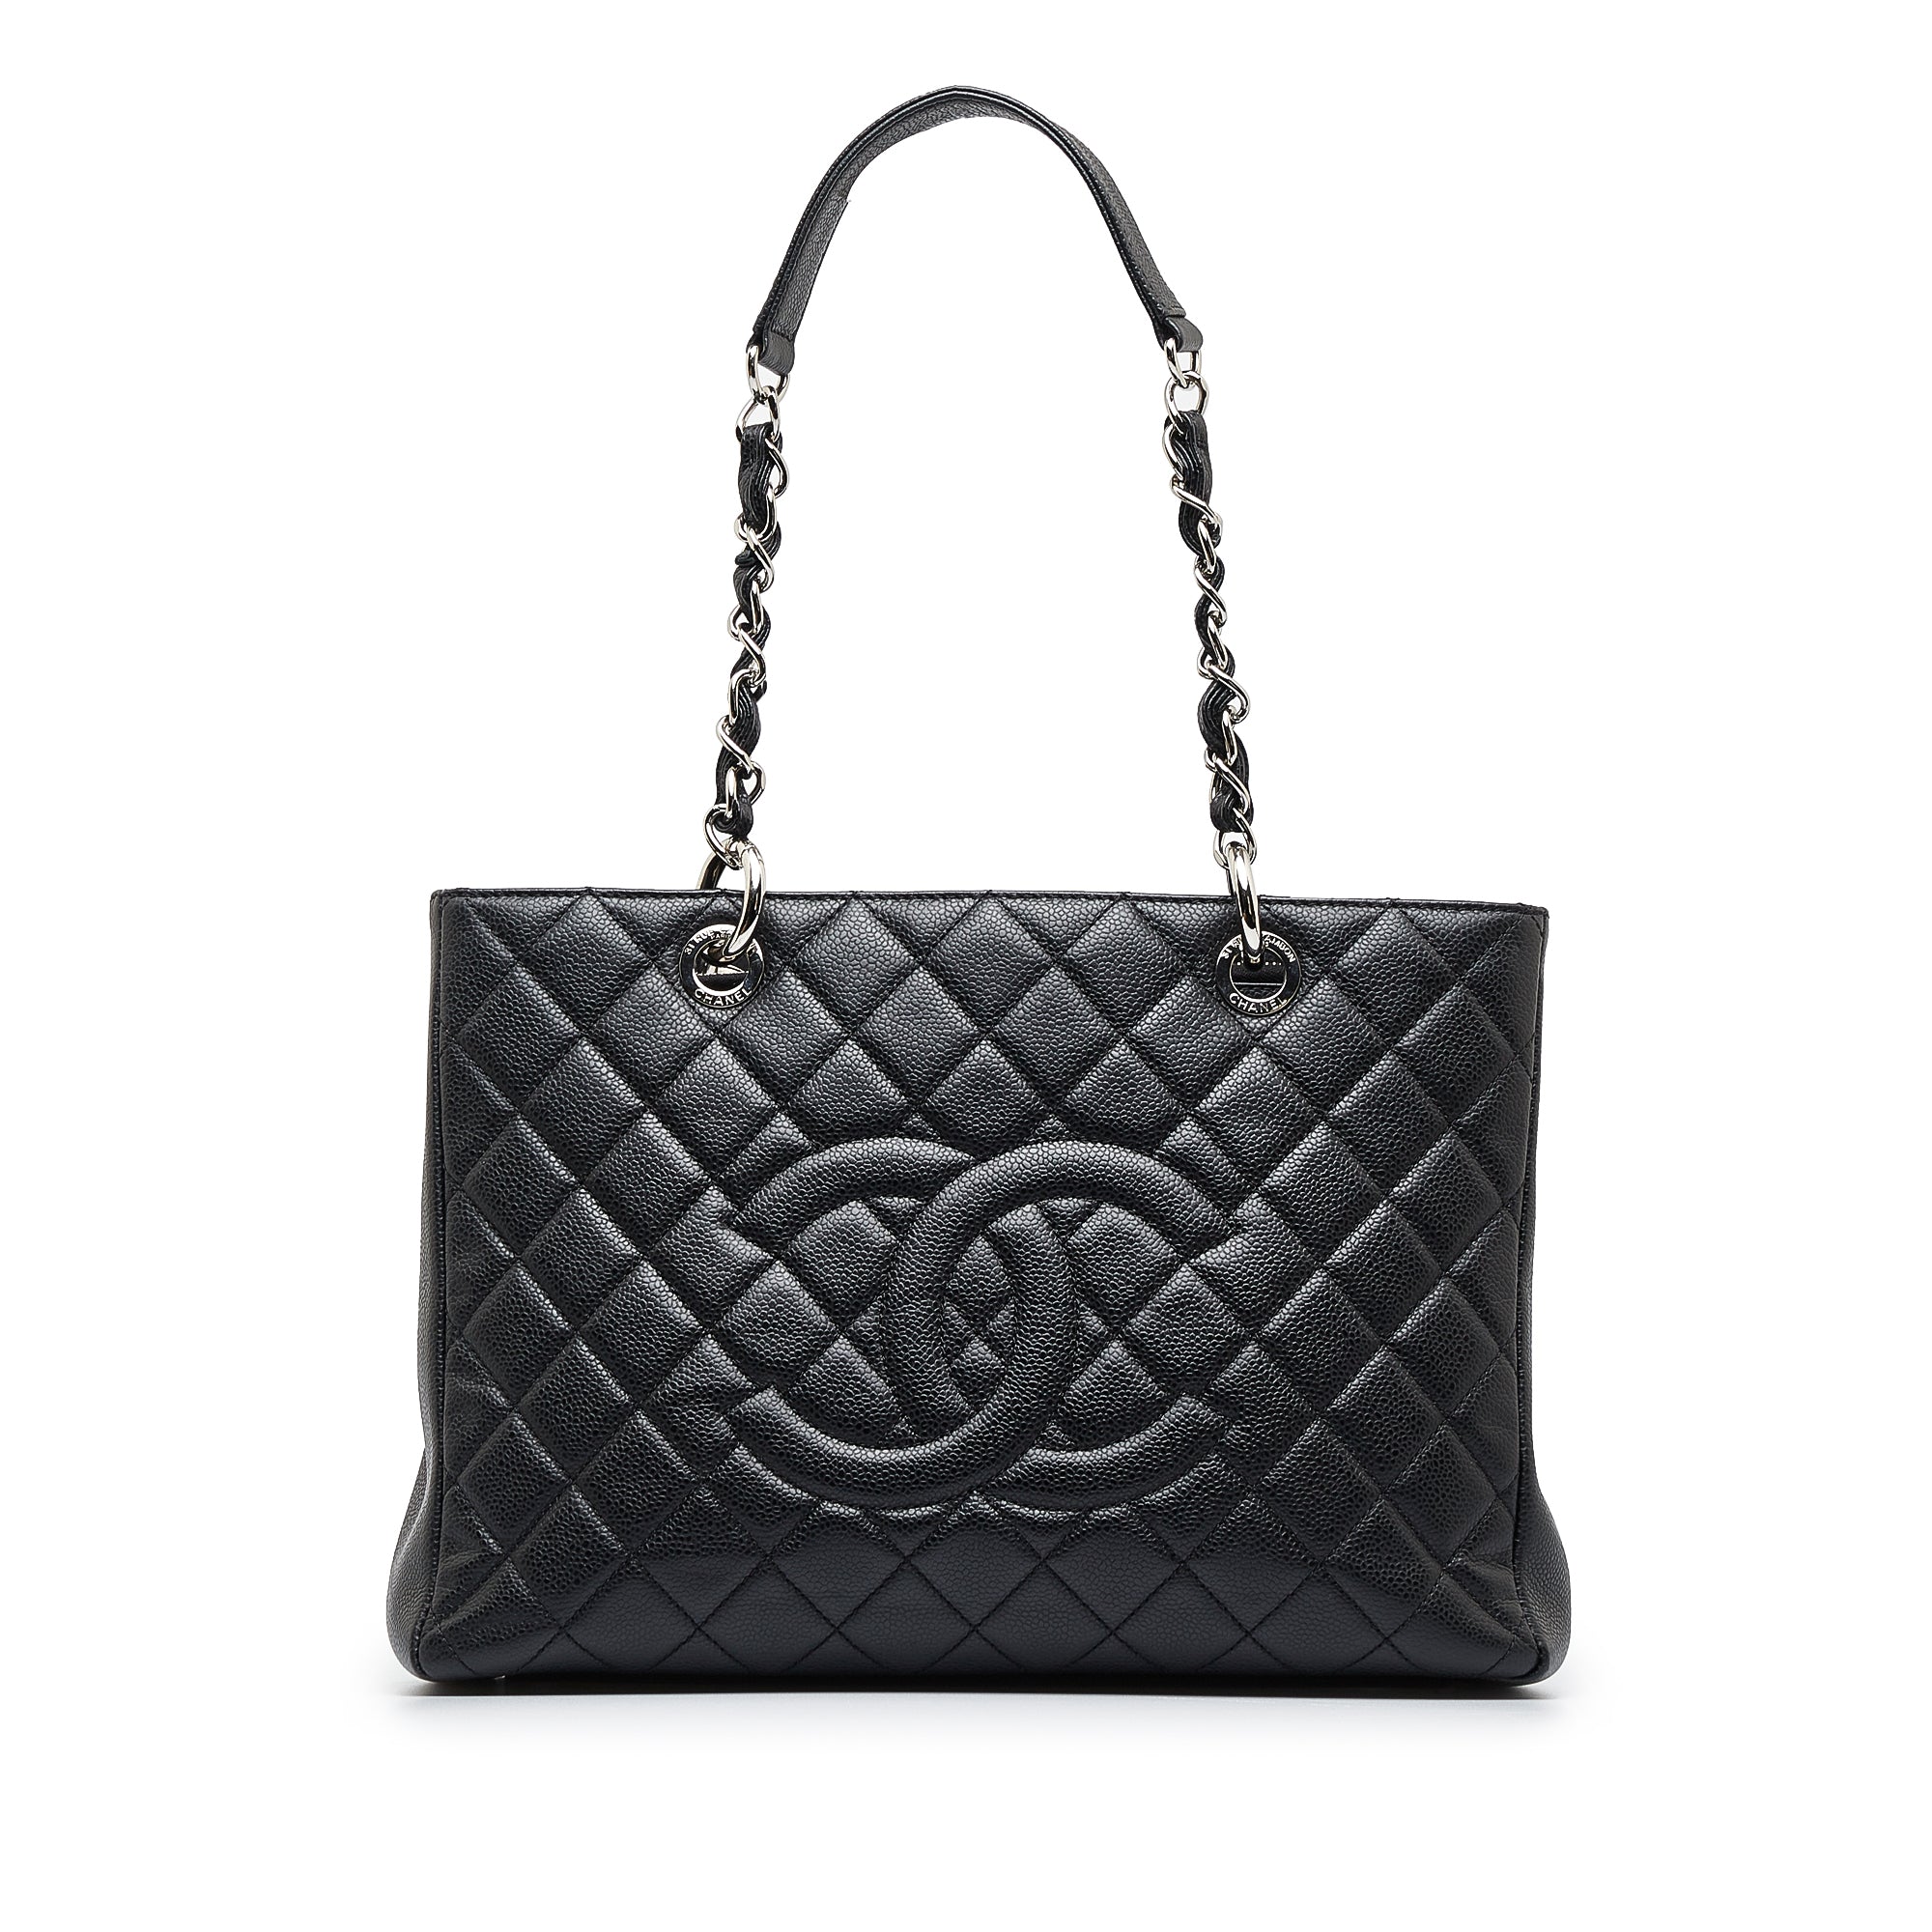 Chanel Chanel White caviar Leather shoulder Bag pochette Gold Chain